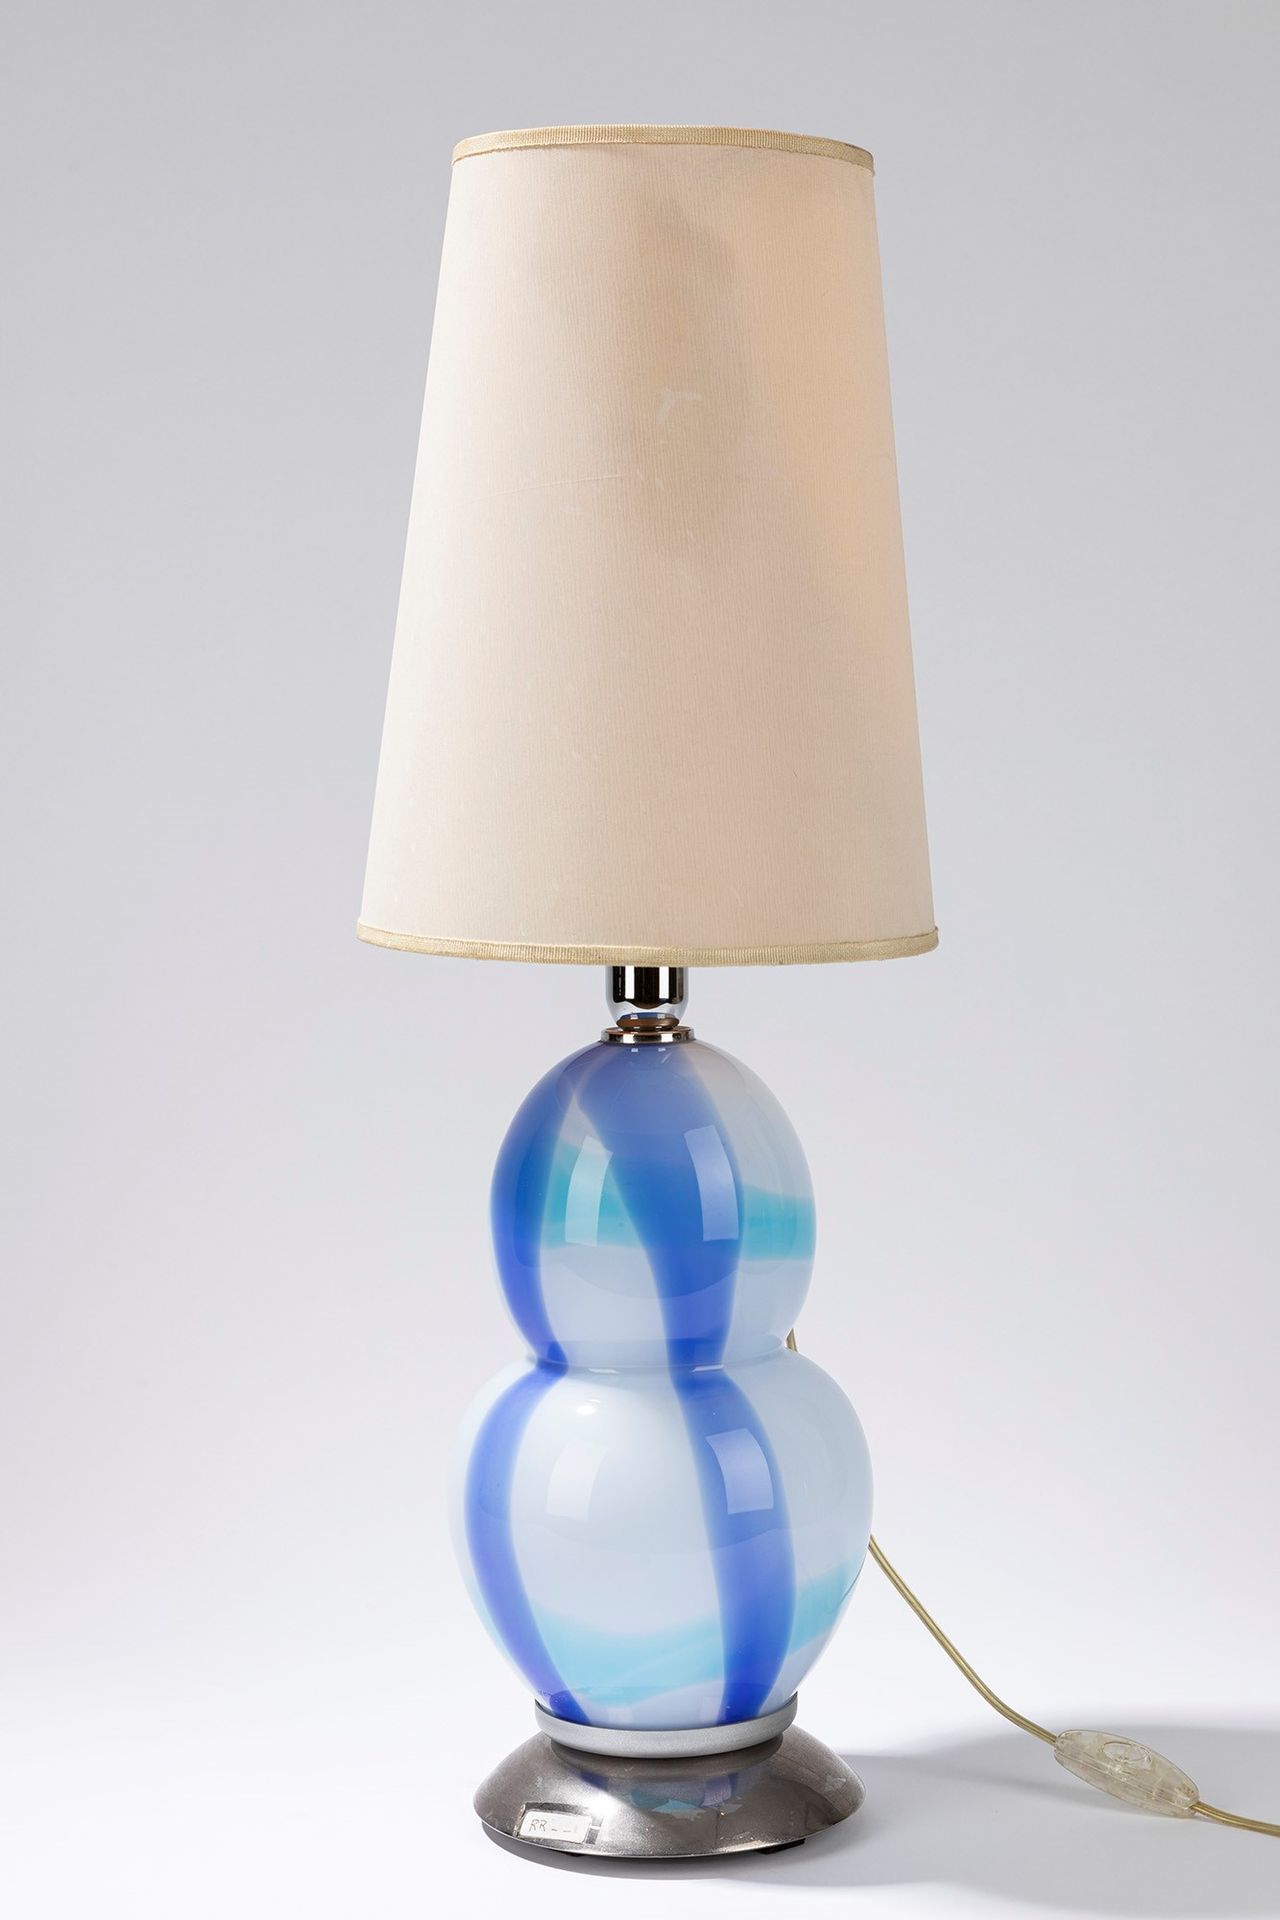 Ettore Sottsass Lámpara de mesa, época de los 70

cm h 64,5 x 20
vidrio policrom&hellip;